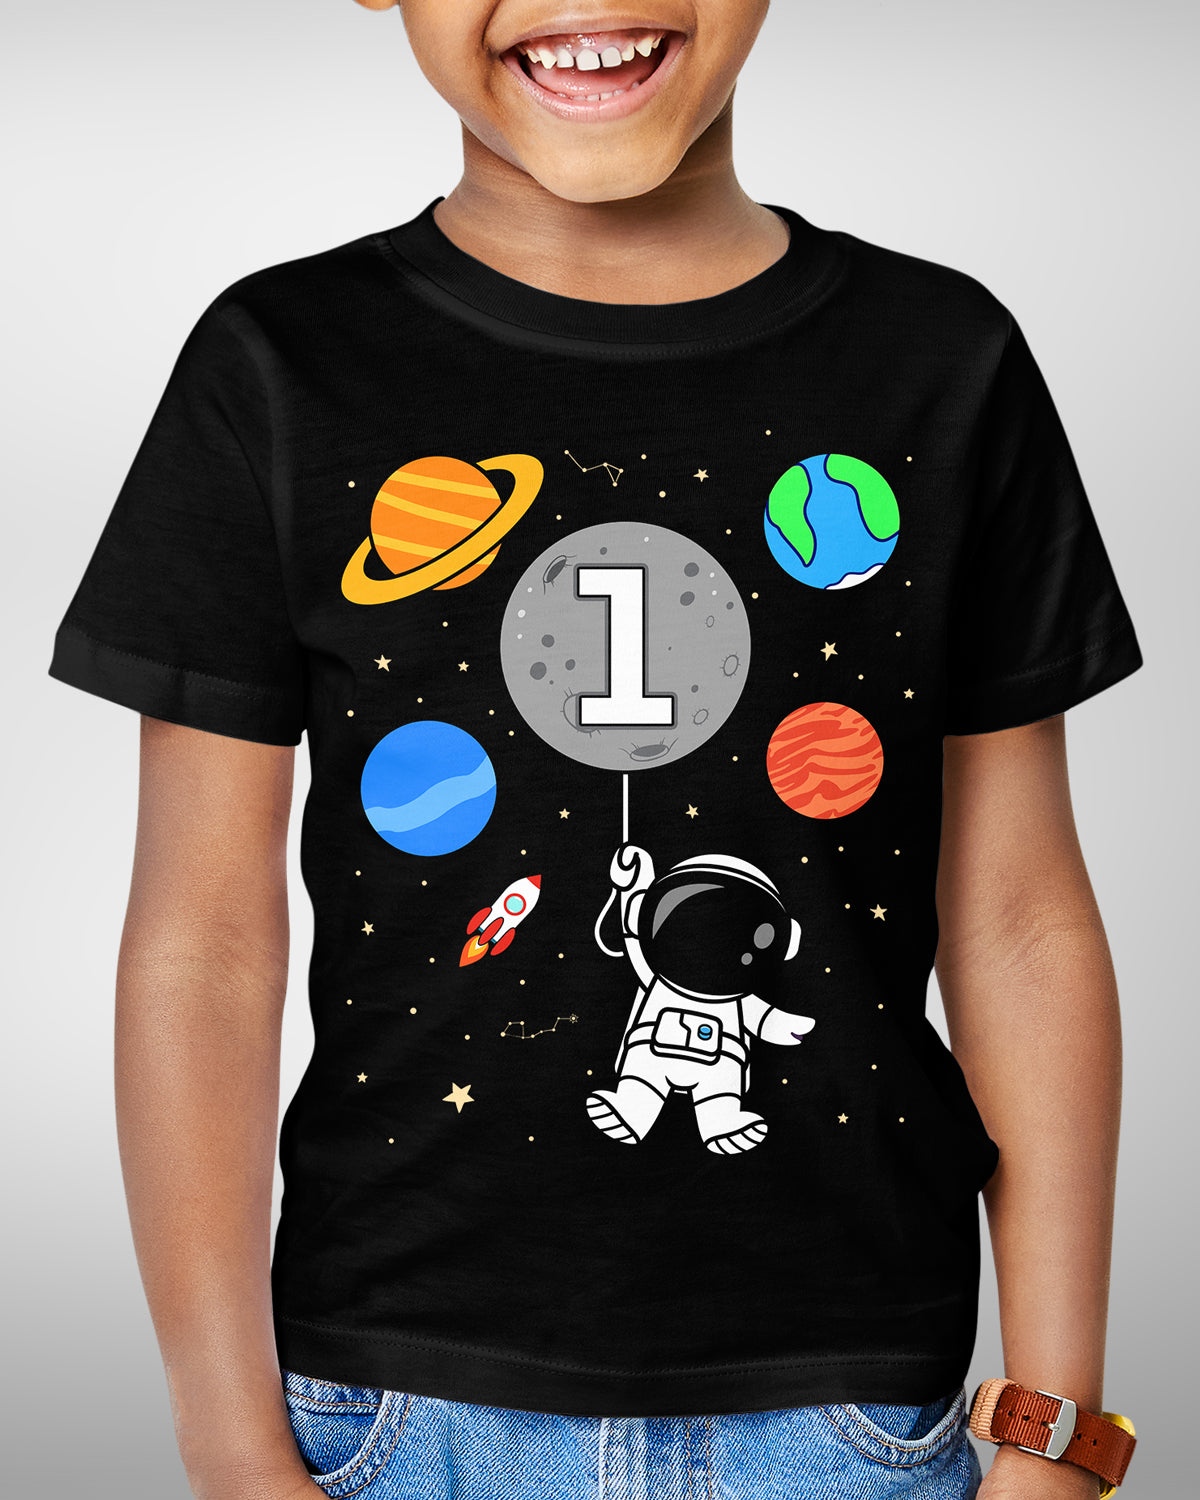 1st Birthday Astronaut Shirt - Space Exploration Theme, Balloon Planets